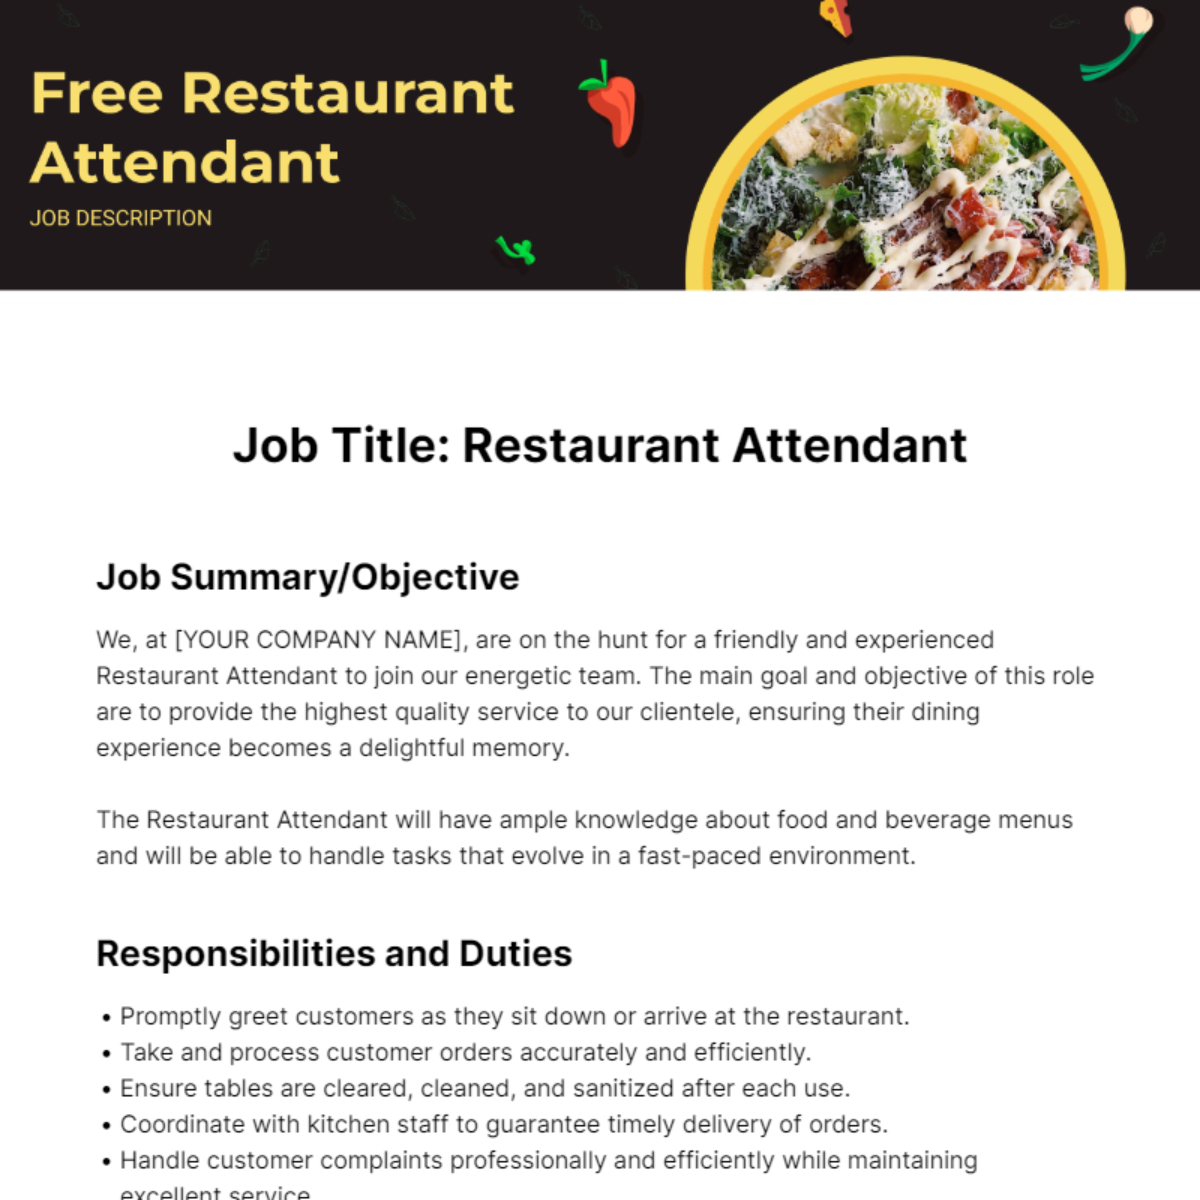 Restaurant Attendant Job Description Template